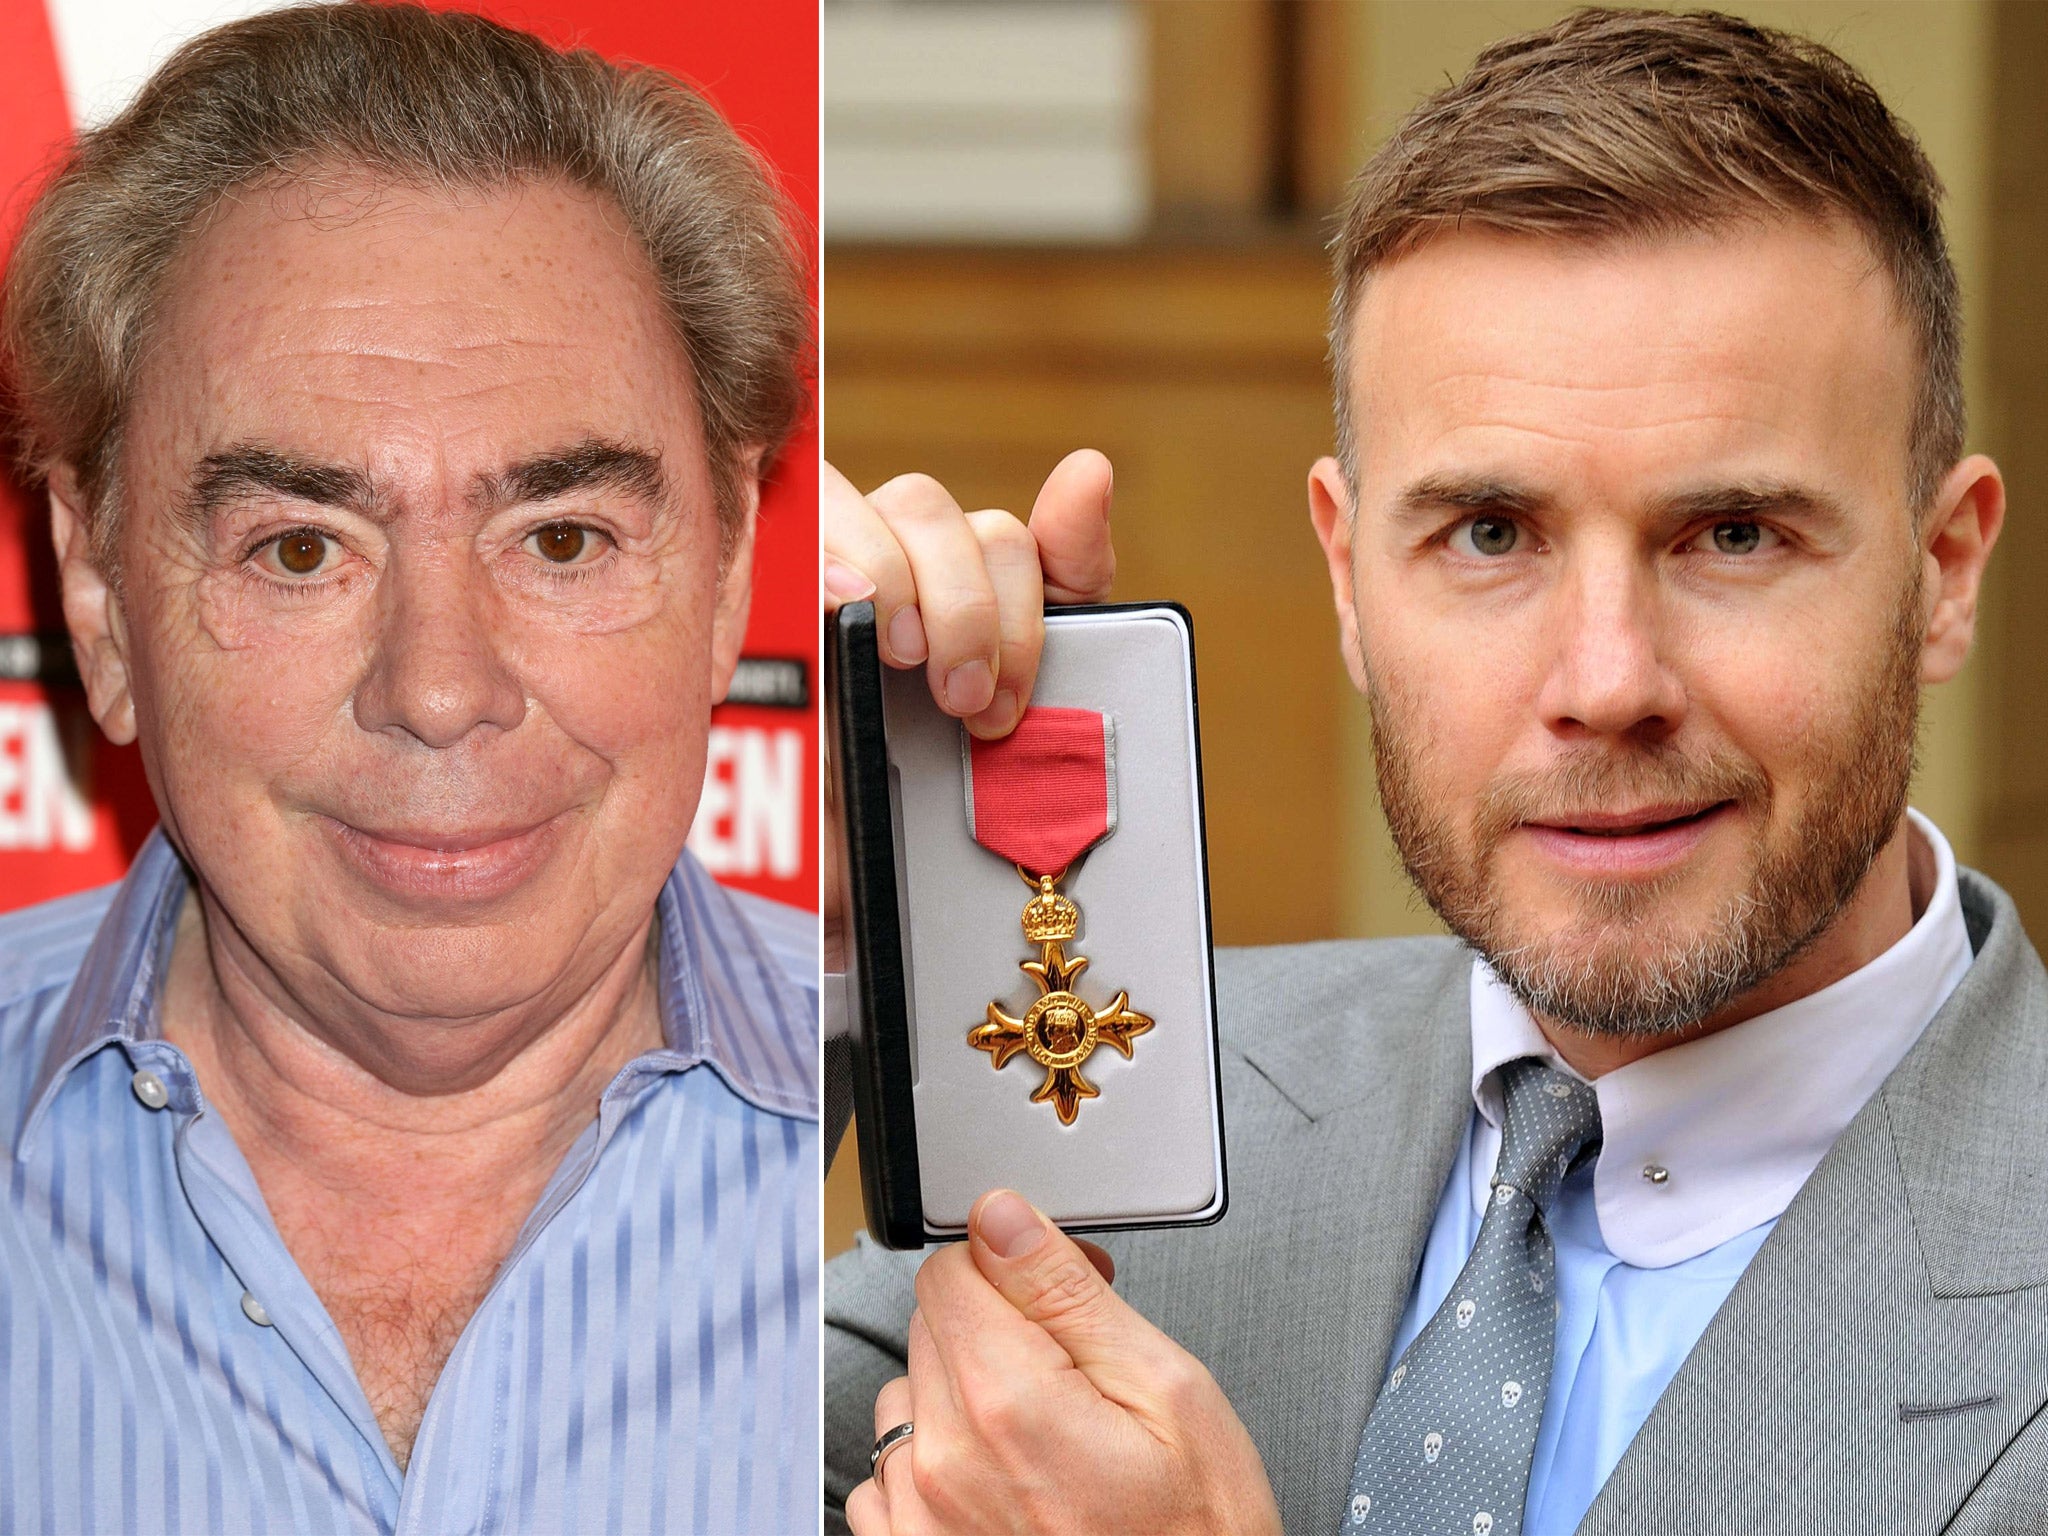 Andrew Lloyd Webber doesn't believe Gary Barlow should return his OBE